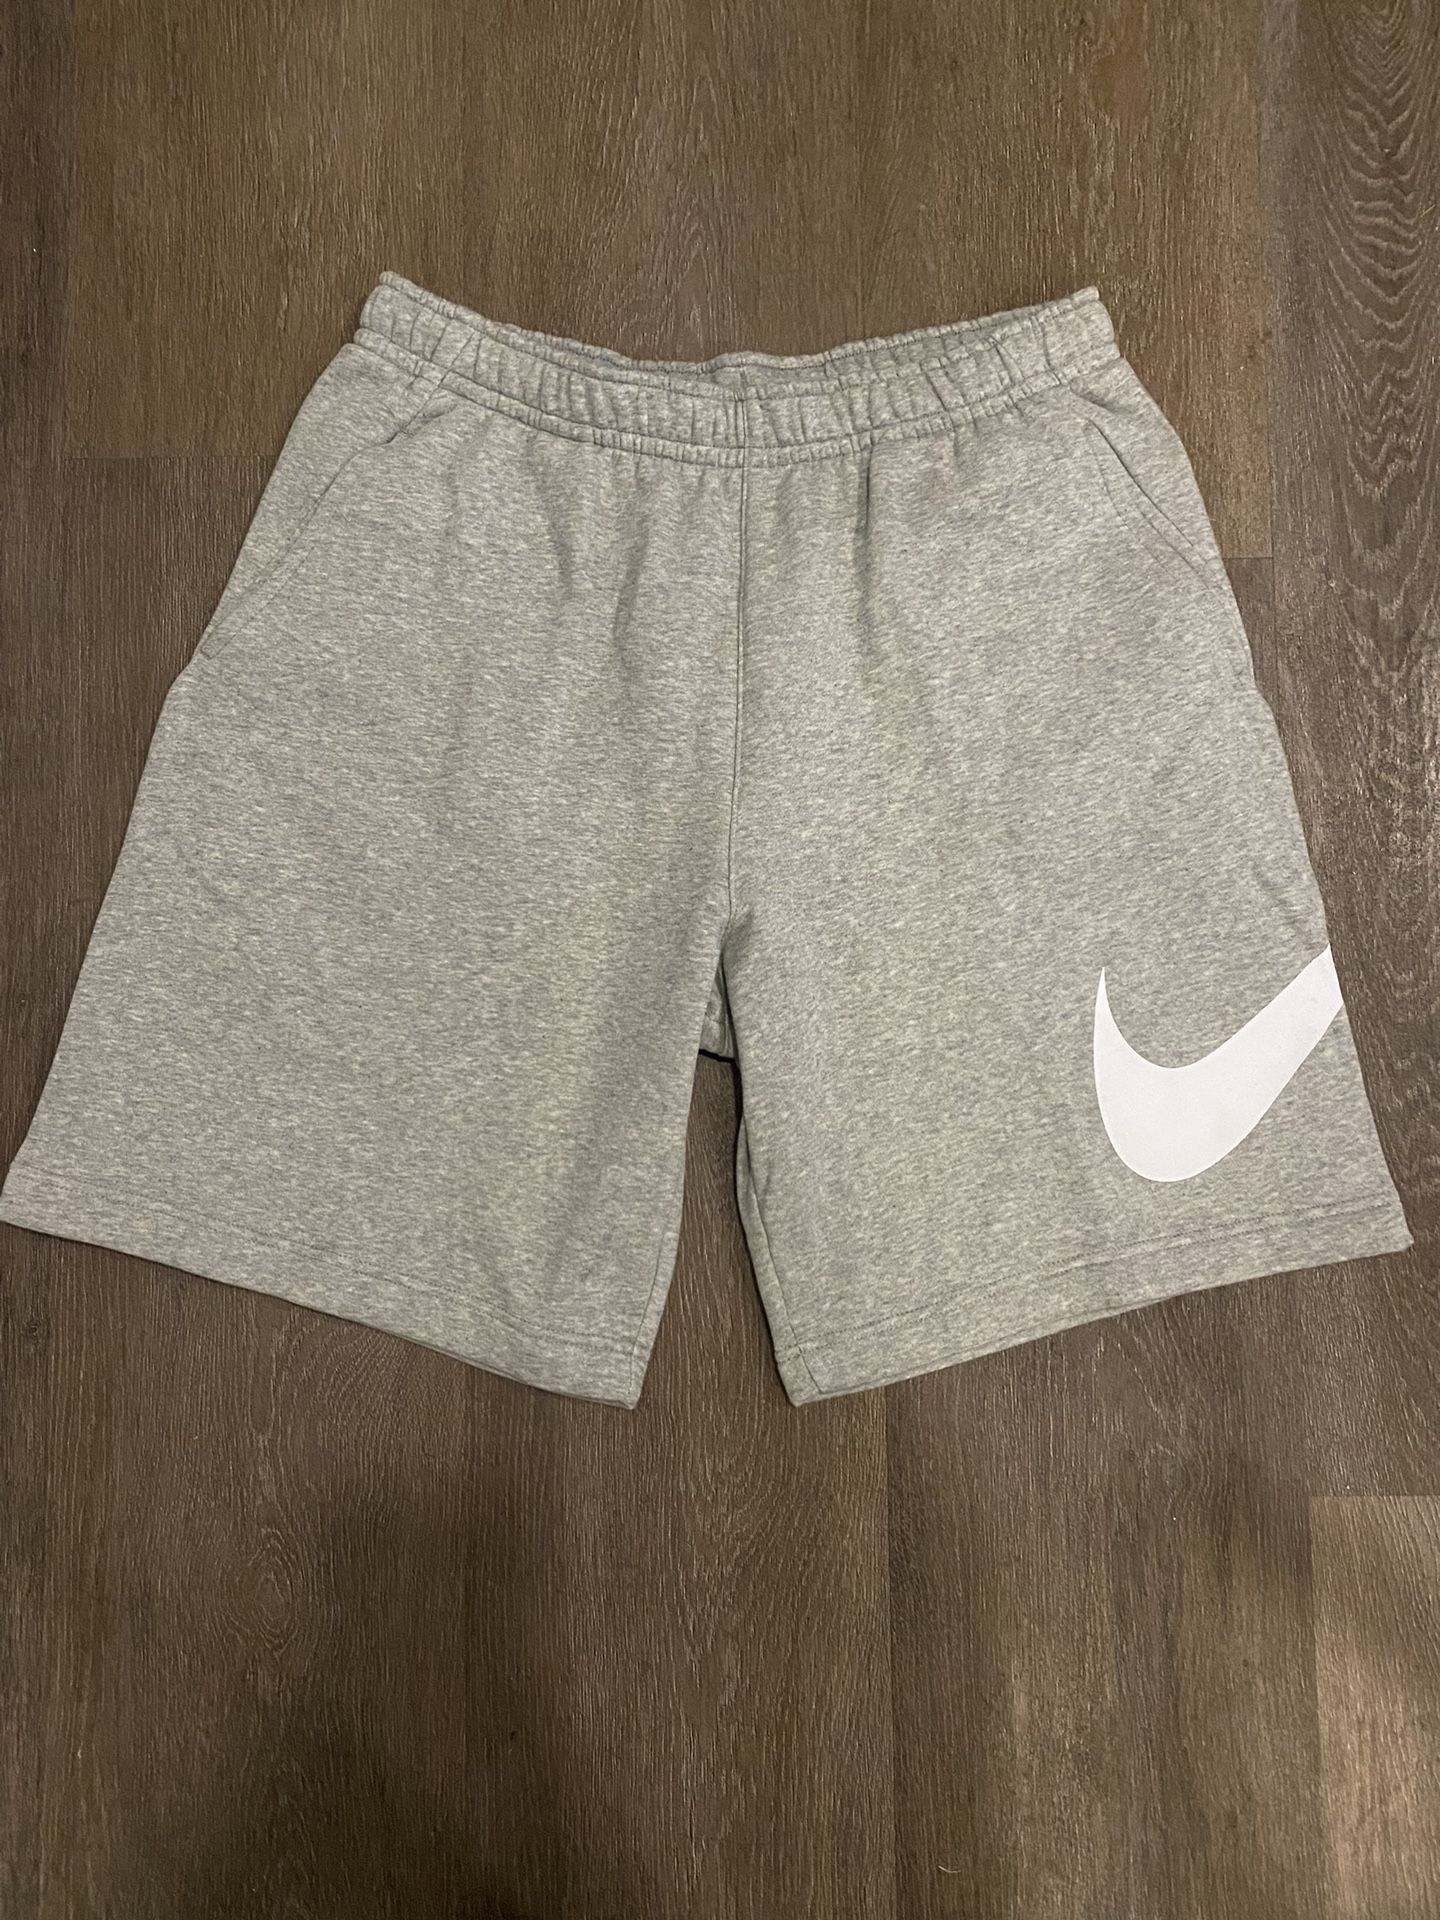 Gray Nike shorts Size L